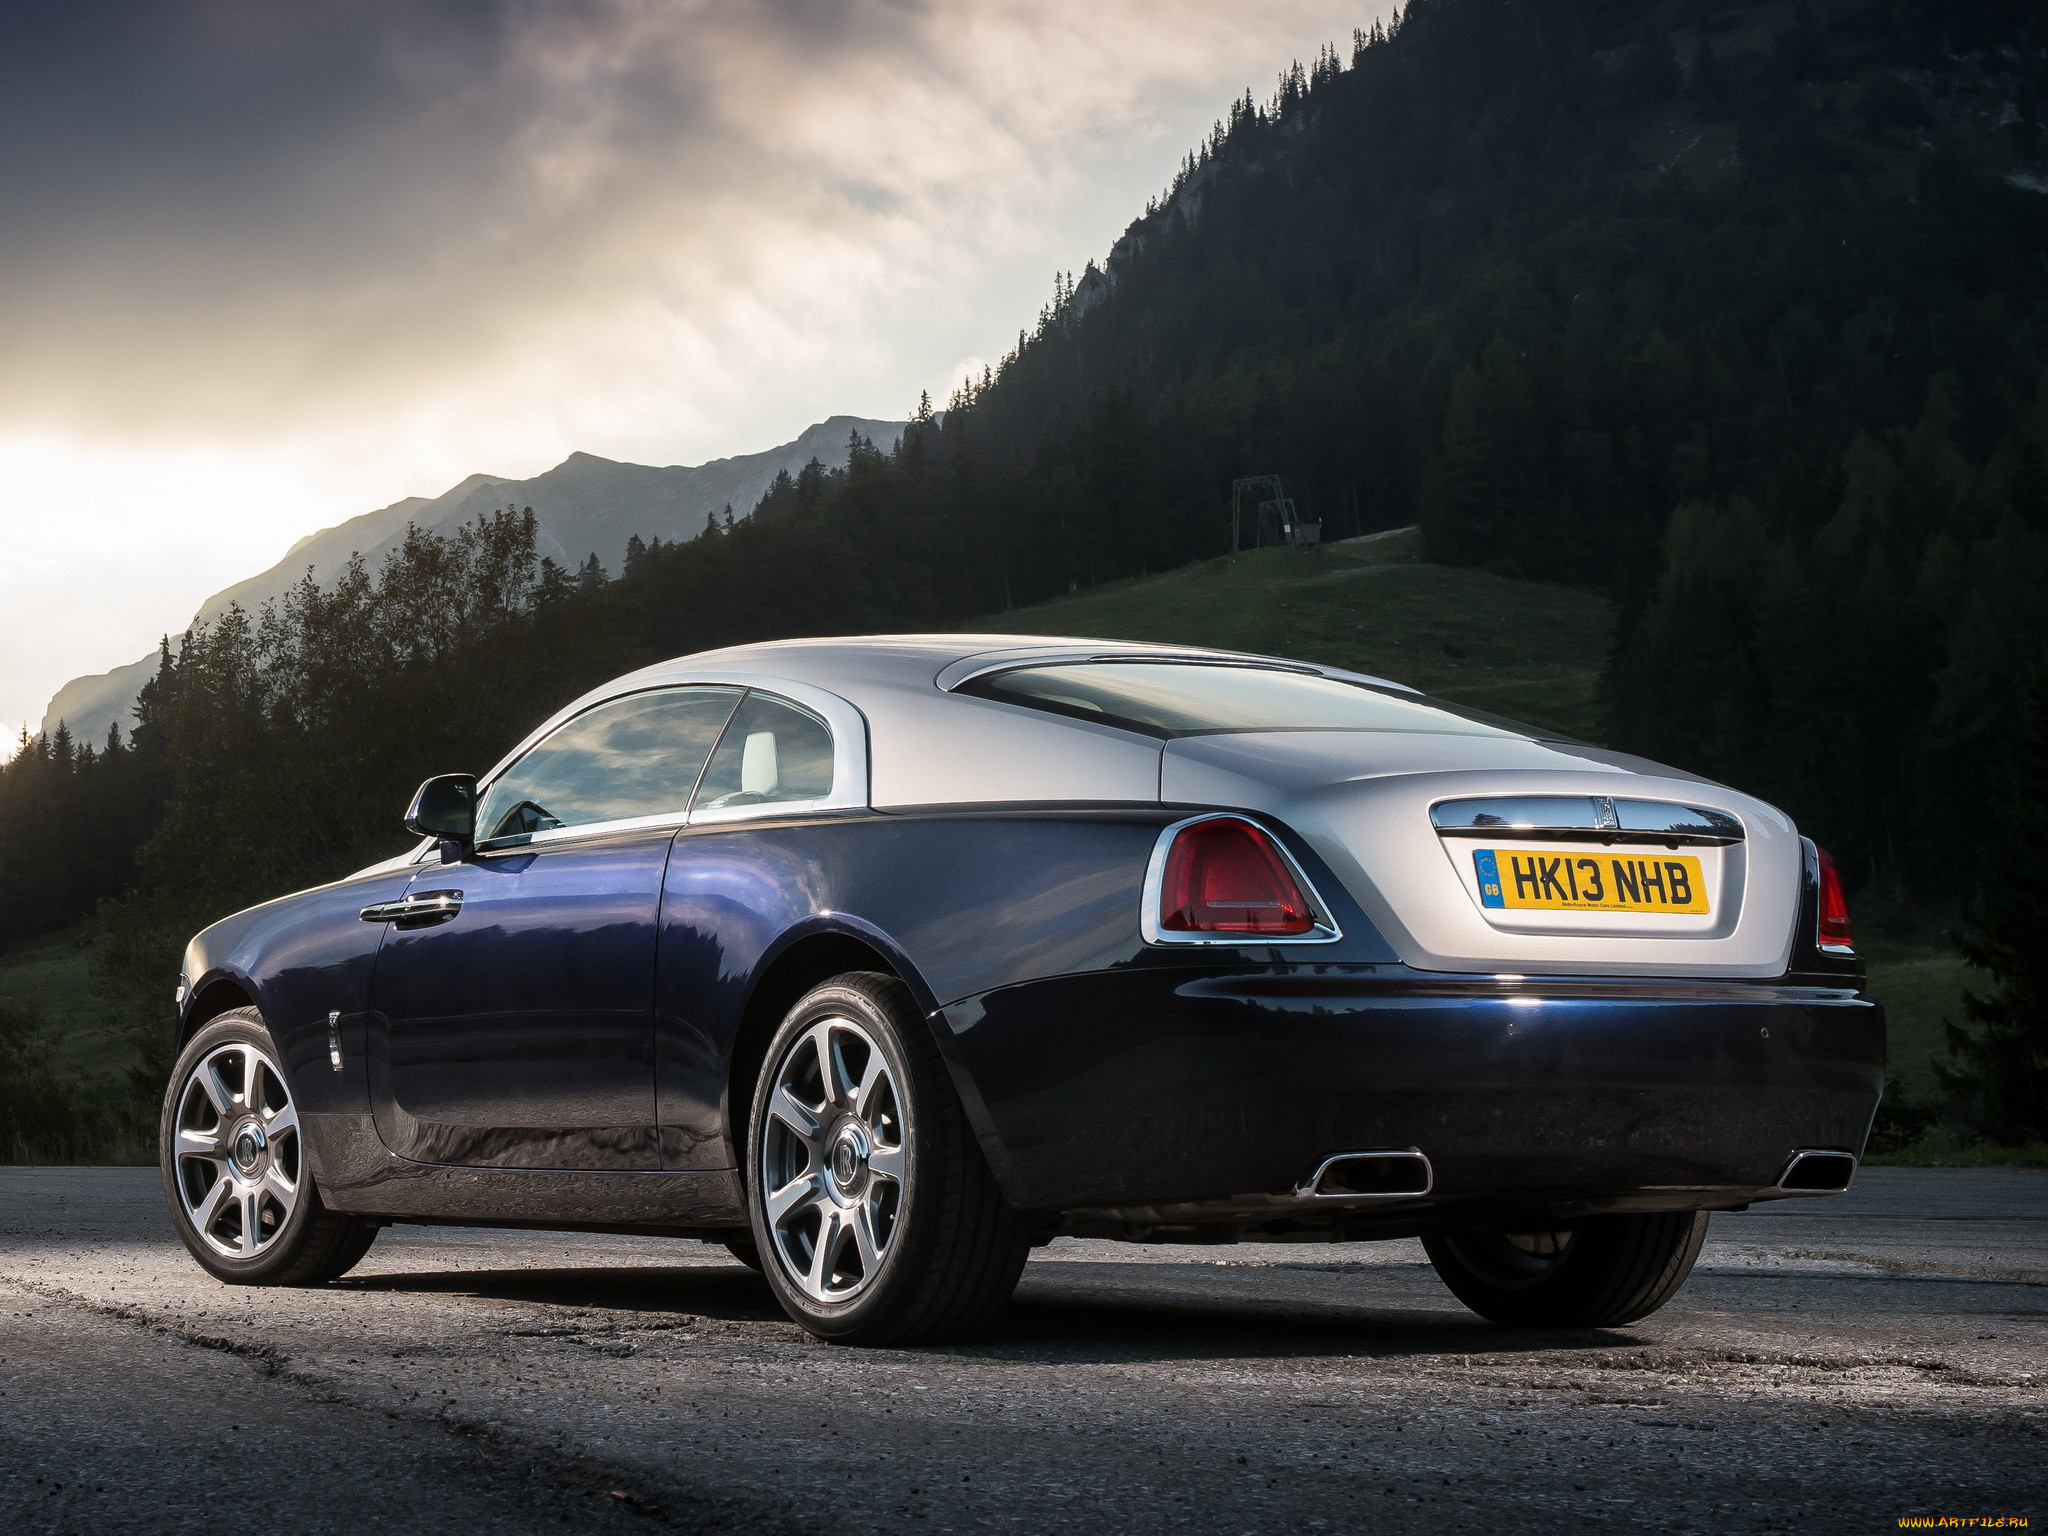 Роллс врайт. Rolls-Royce Wraith (2013). Rolls Royce Wraith Coupe. Rolls Royce Wraith купе. Rolls Royce 2013.